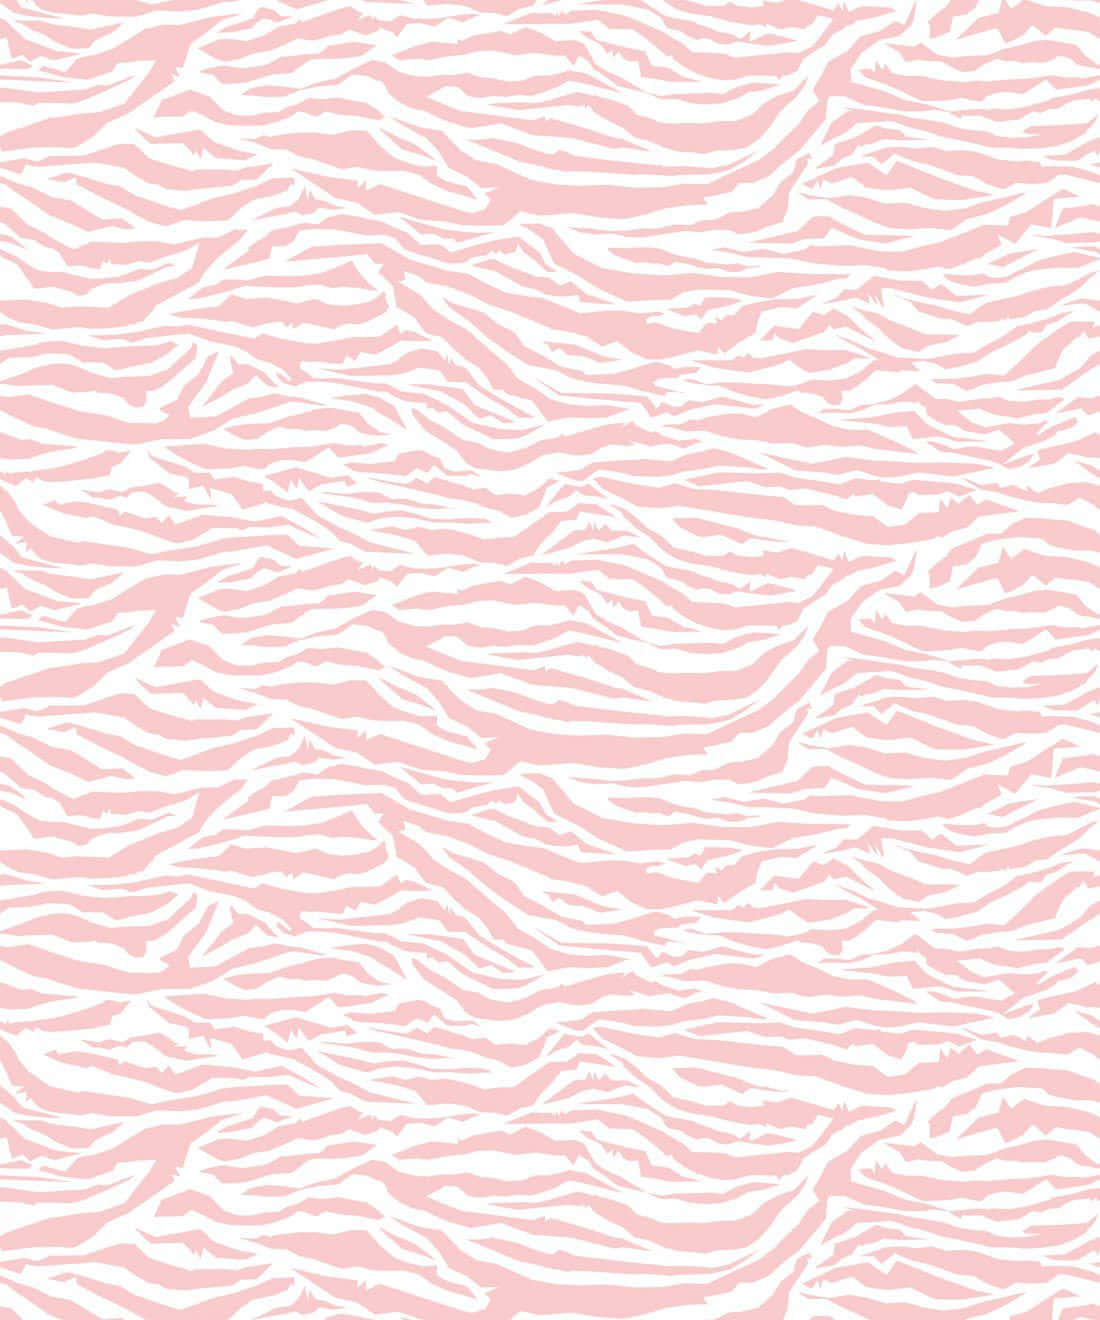 Colorful Stripes Of Pink Zebra Background